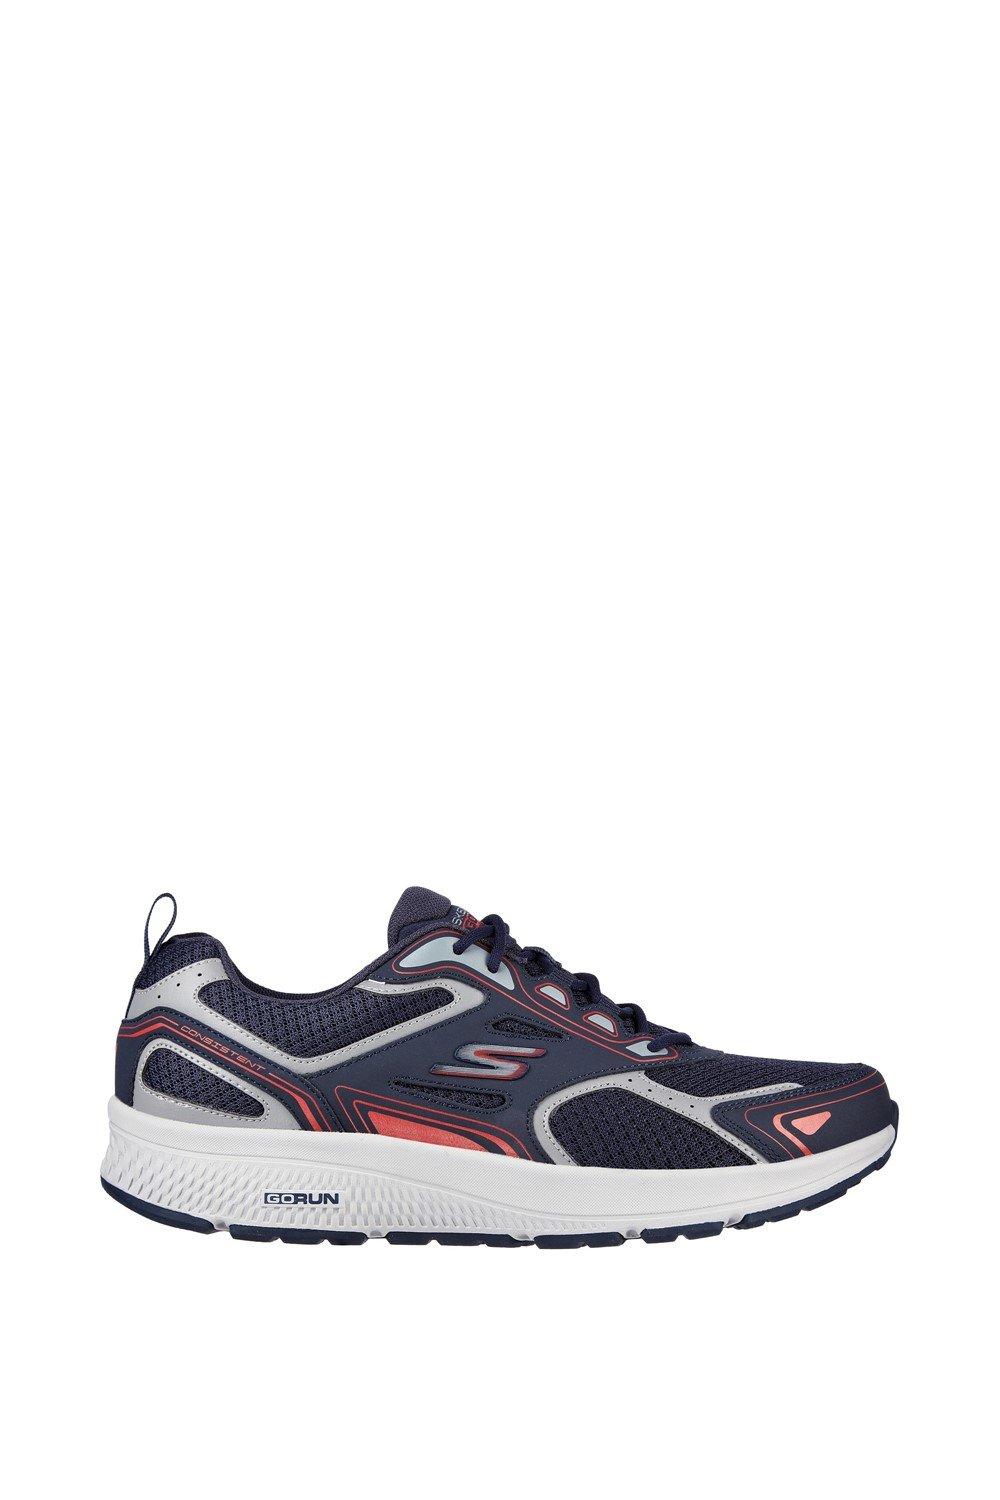 Кроссовки Go Run Consistent Wide Sports Shoe Skechers, темно-синий кроссовки для девочек skechers go run consistent розовый